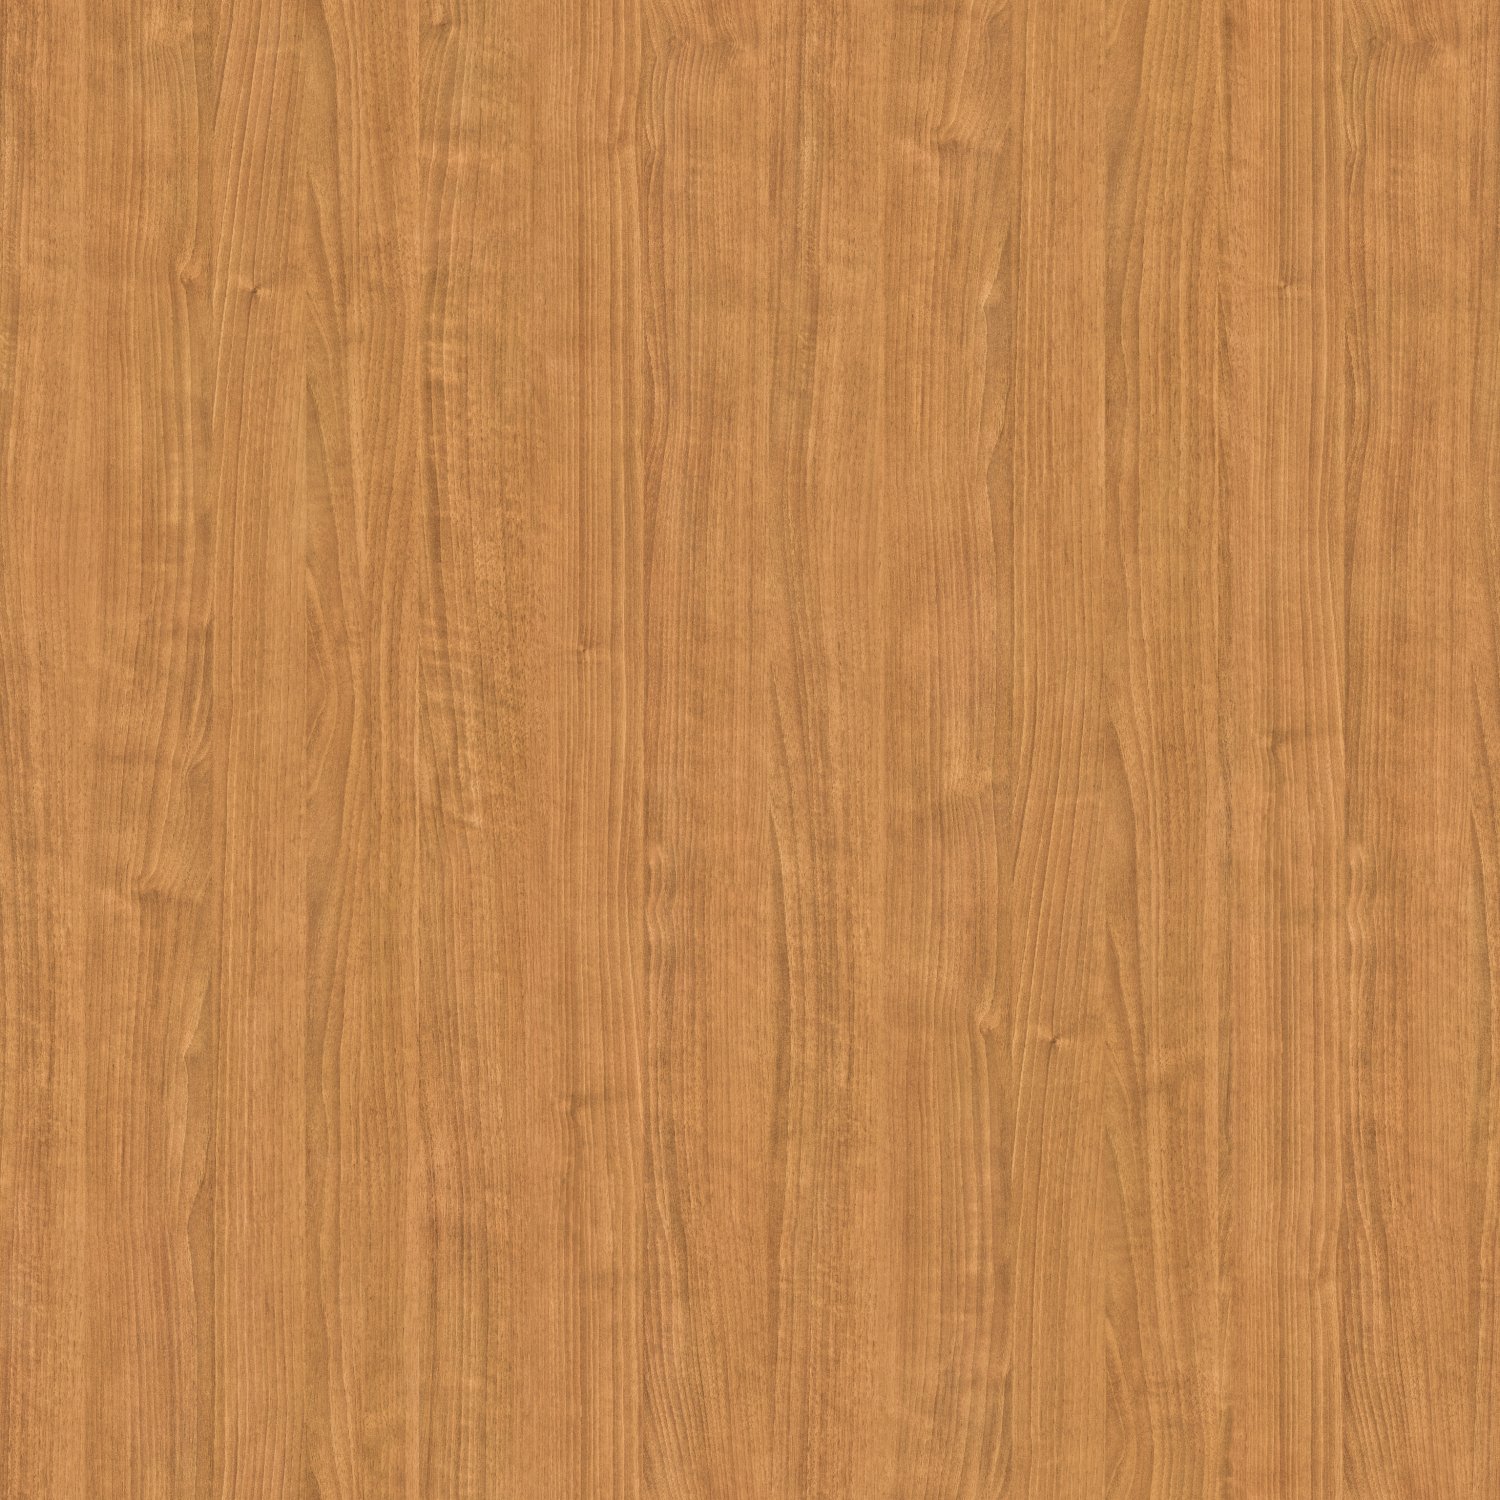 seamless hardwood texture